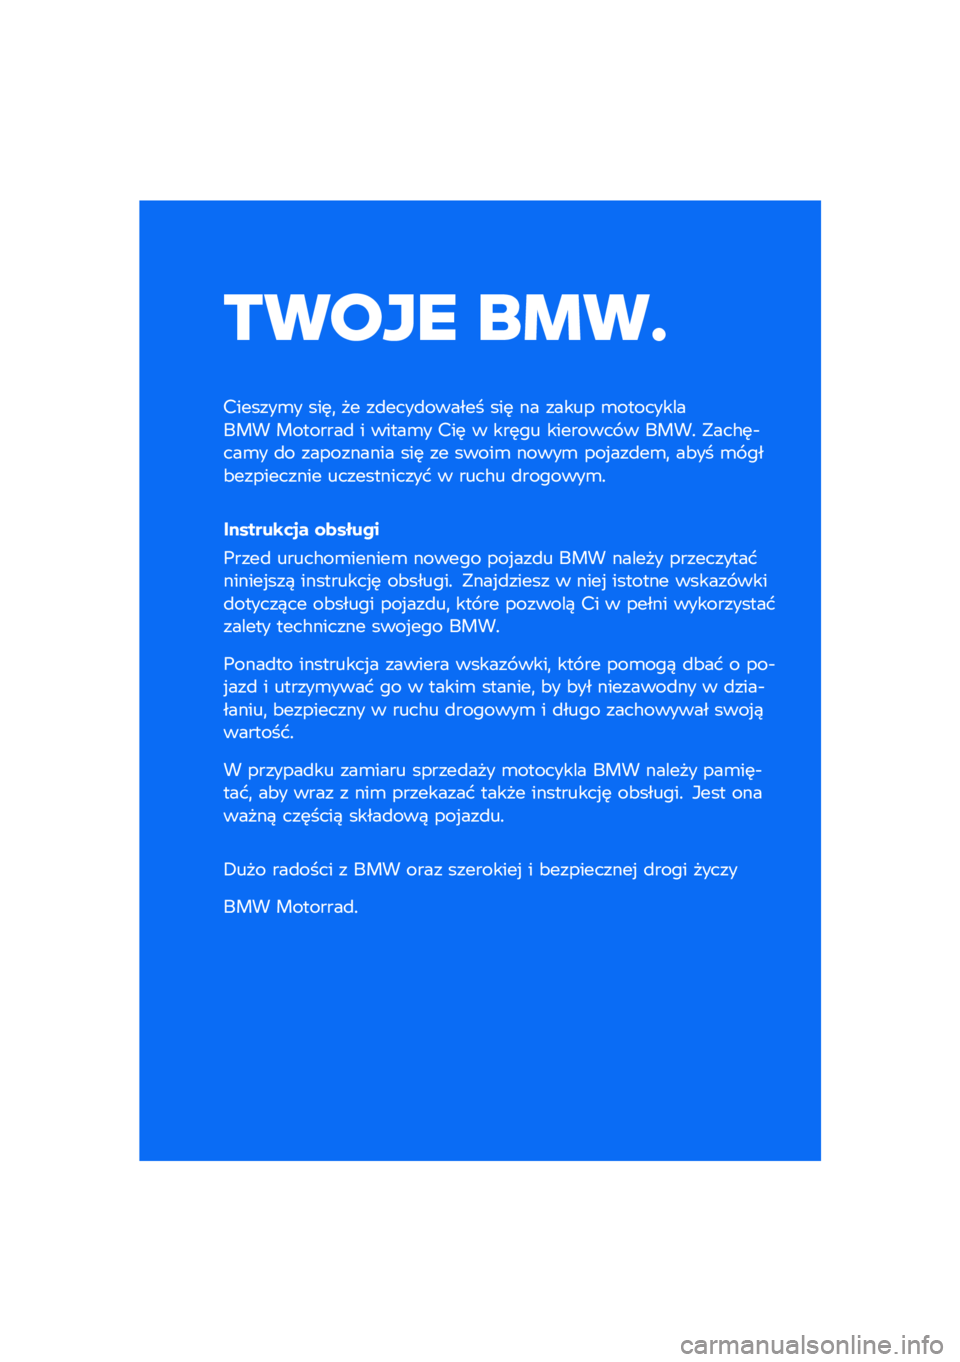 BMW MOTORRAD C 400 GT 2020  Instrukcja obsługi (in Polish) ����� ��\b��	
�������\b� ���	�
 �� ��
����
������ ���	 �� ����� �\b����������� ��������
 � �����\b� ���	 � ���	�� �������� �